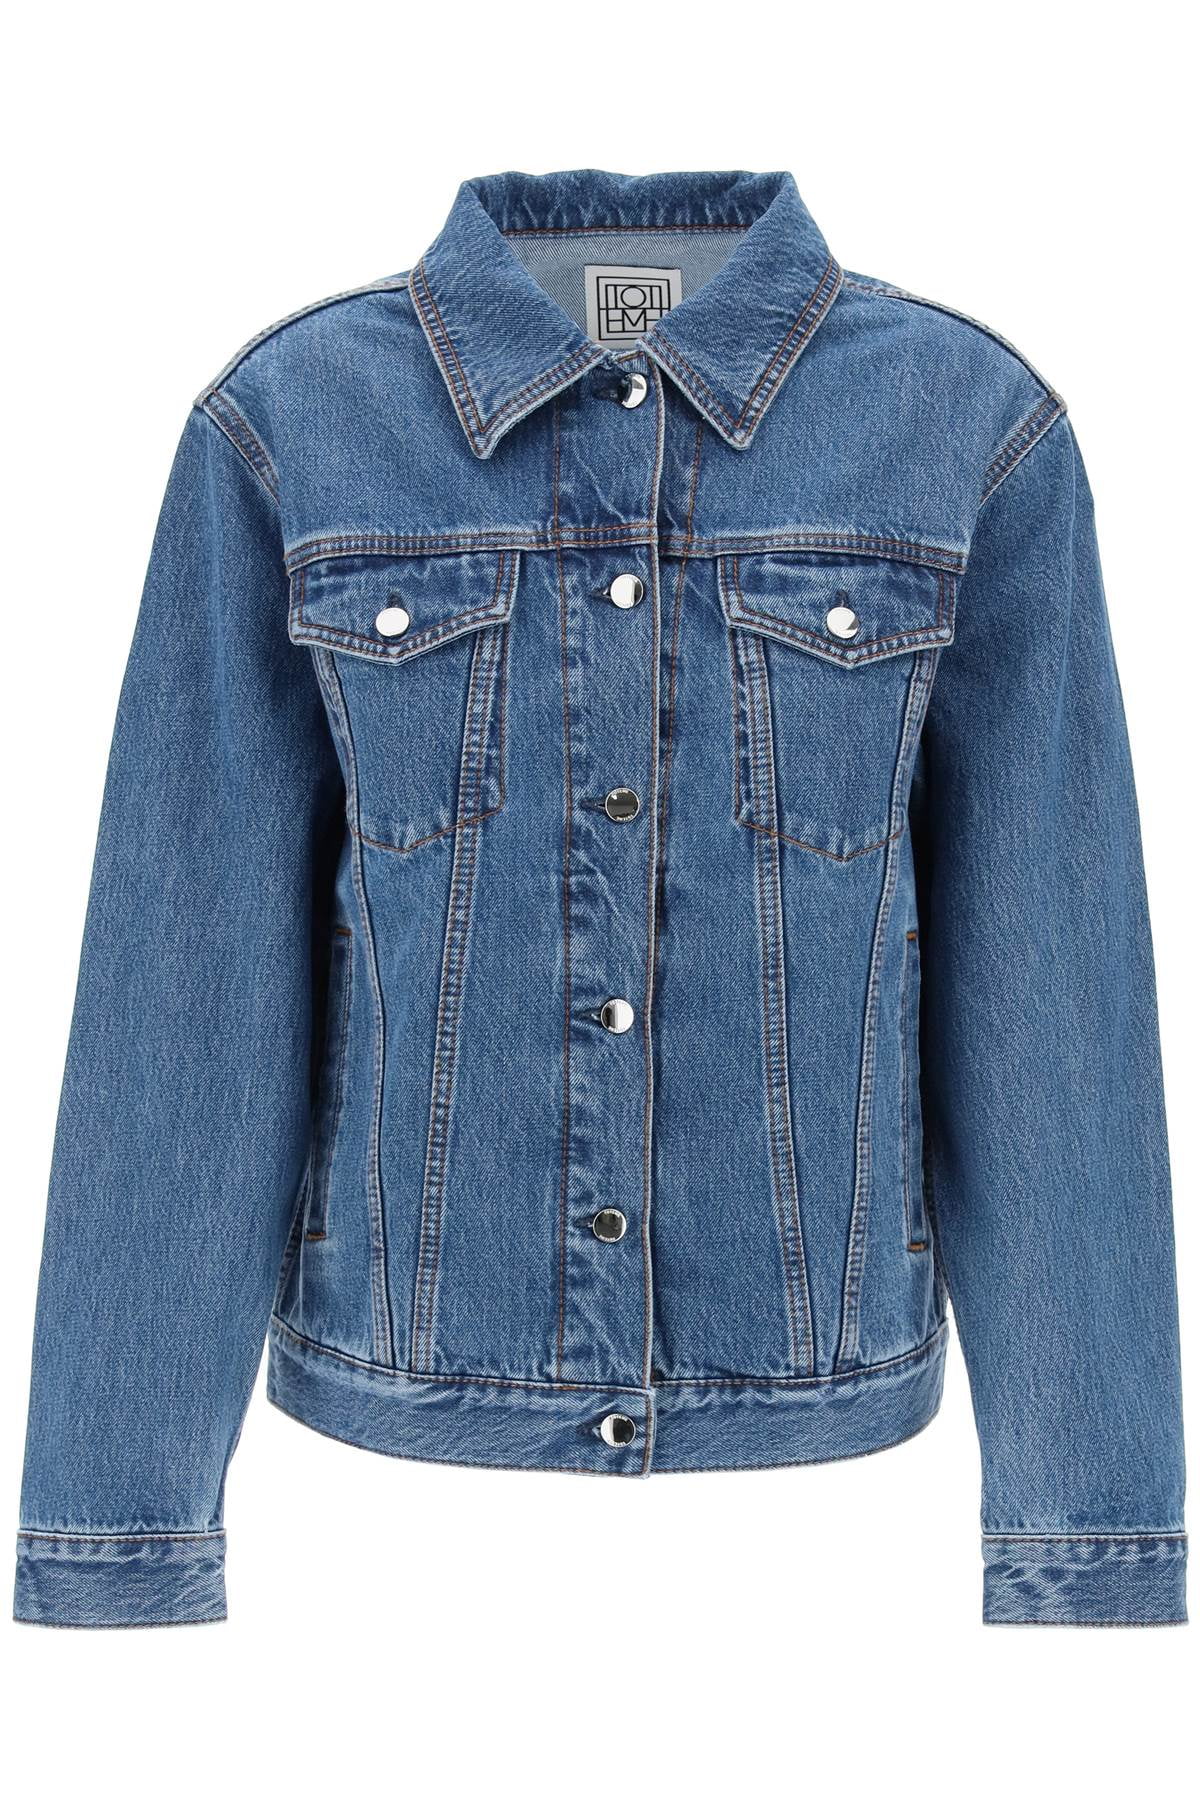 Toteme Classic Line Denim Jacket For Men Or Women Women - Walmart.com